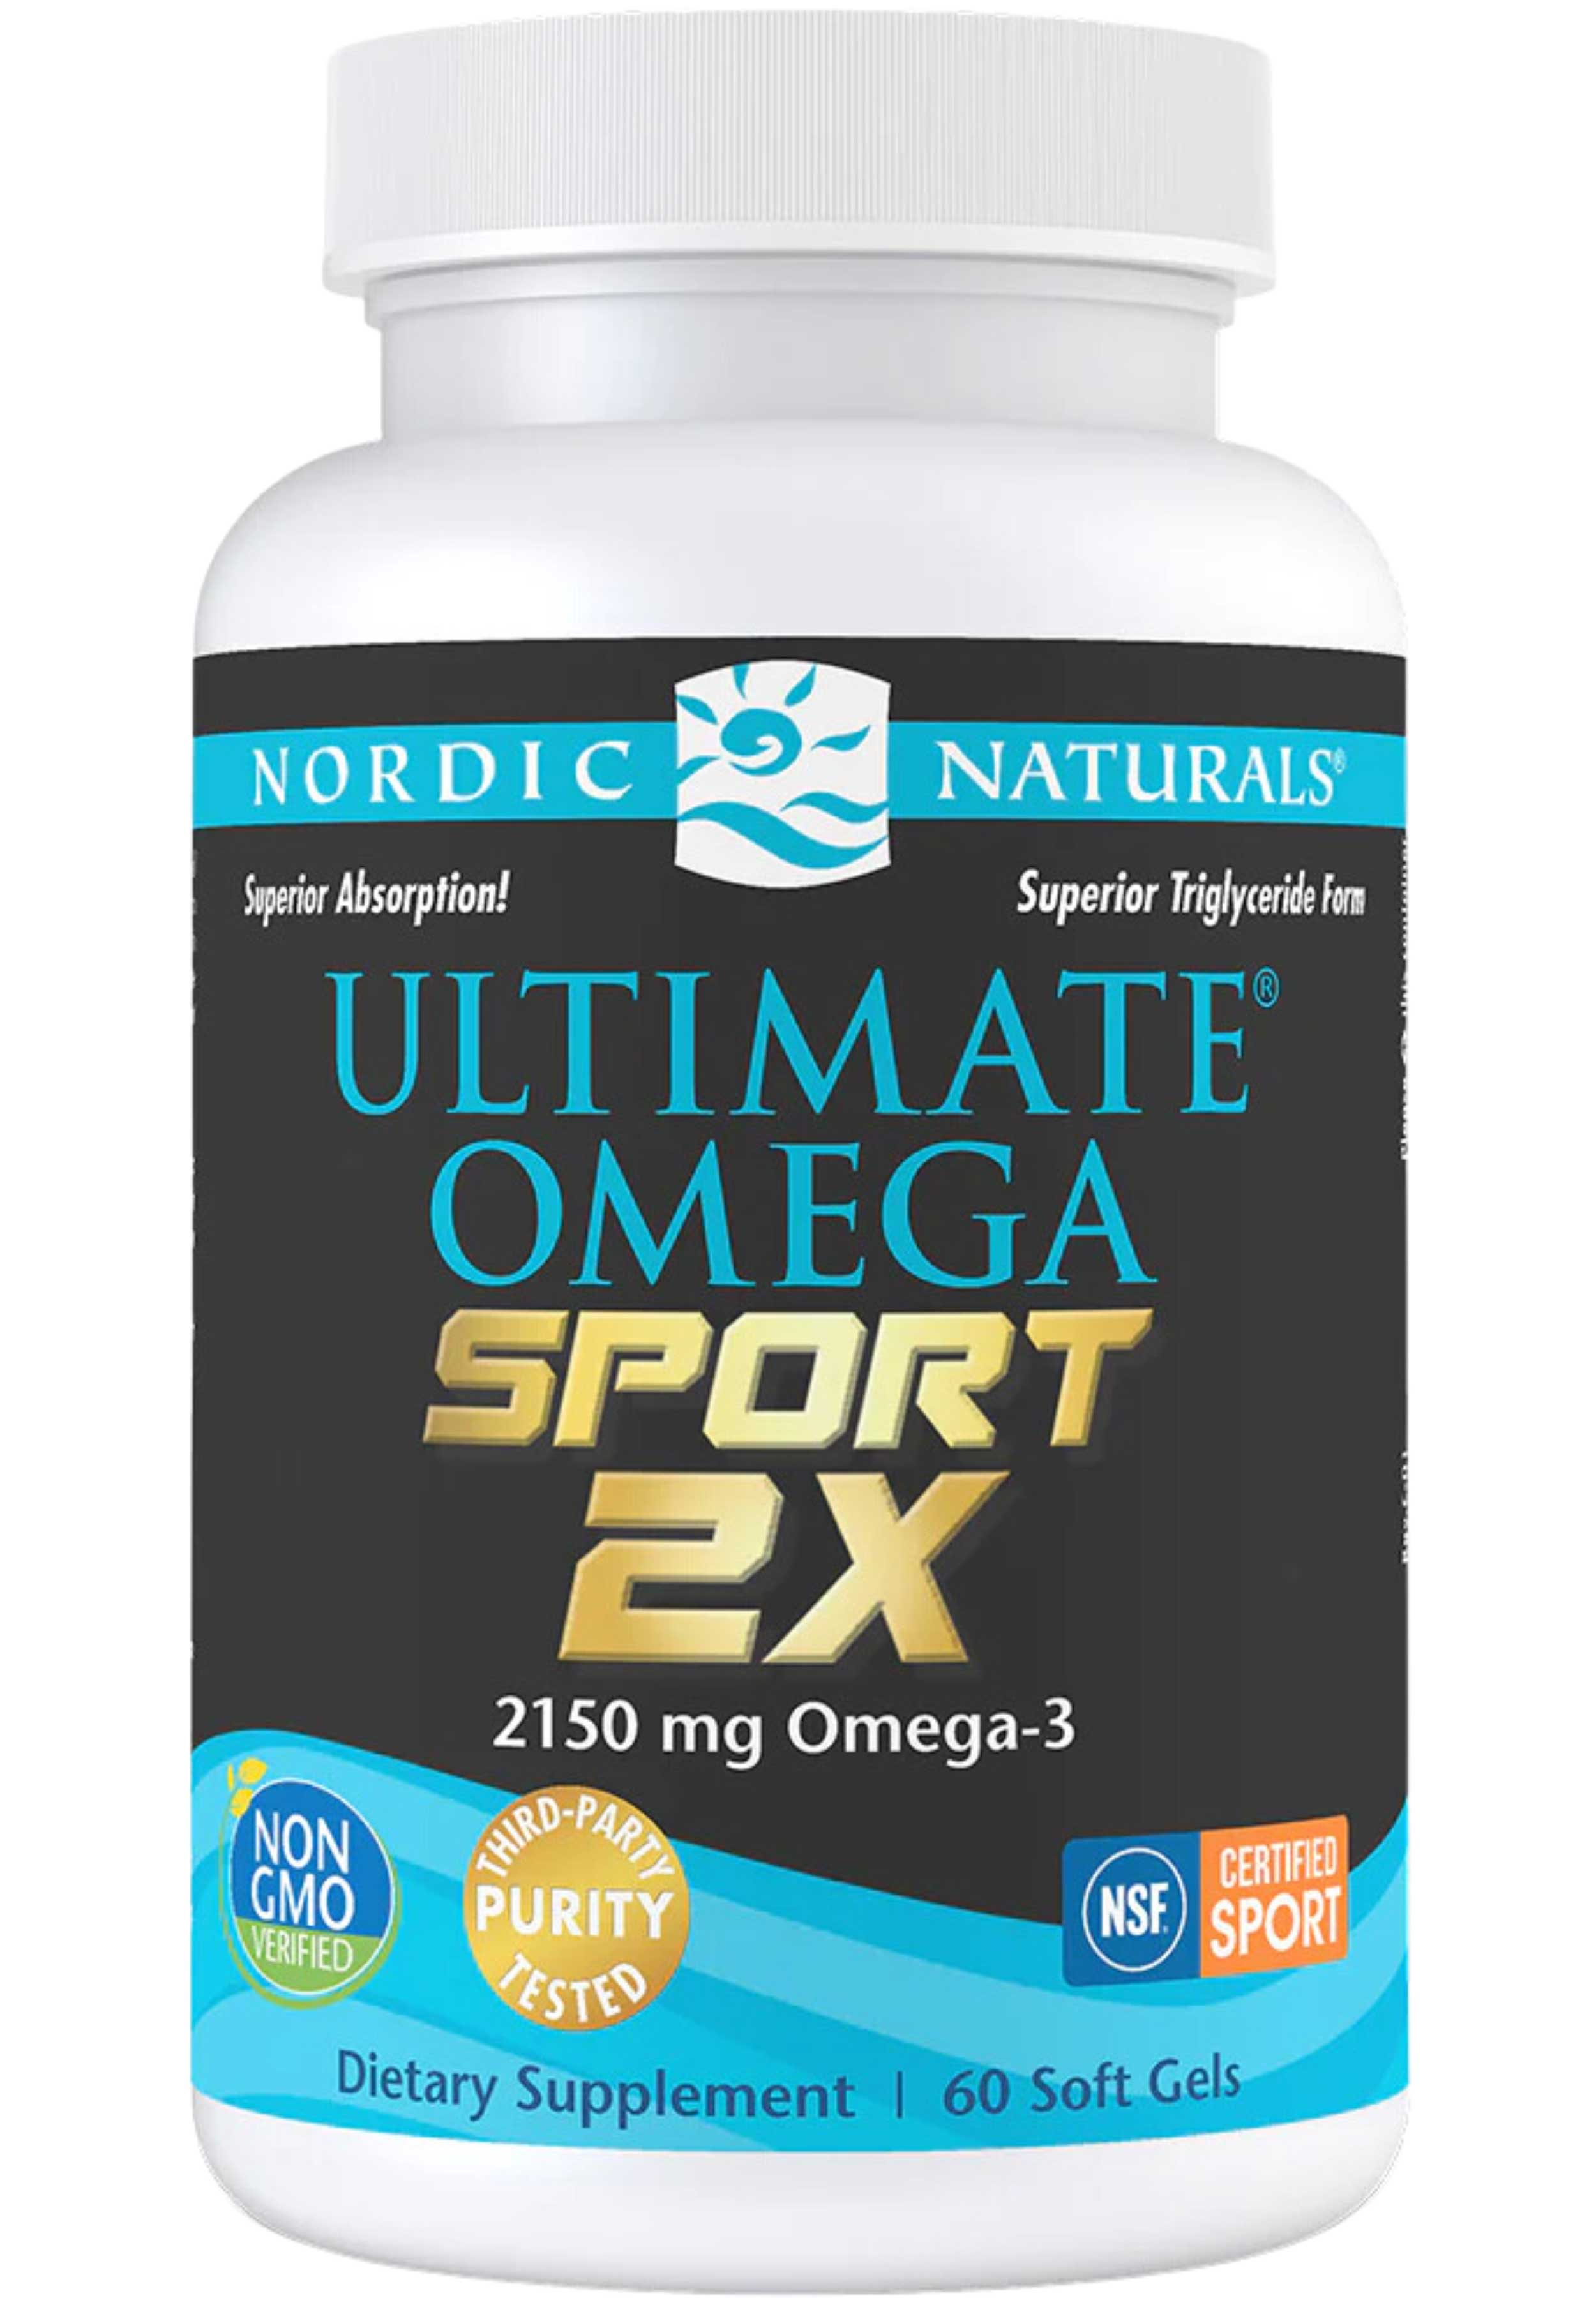 Nordic Naturals Ultimate Omega 2X Sport